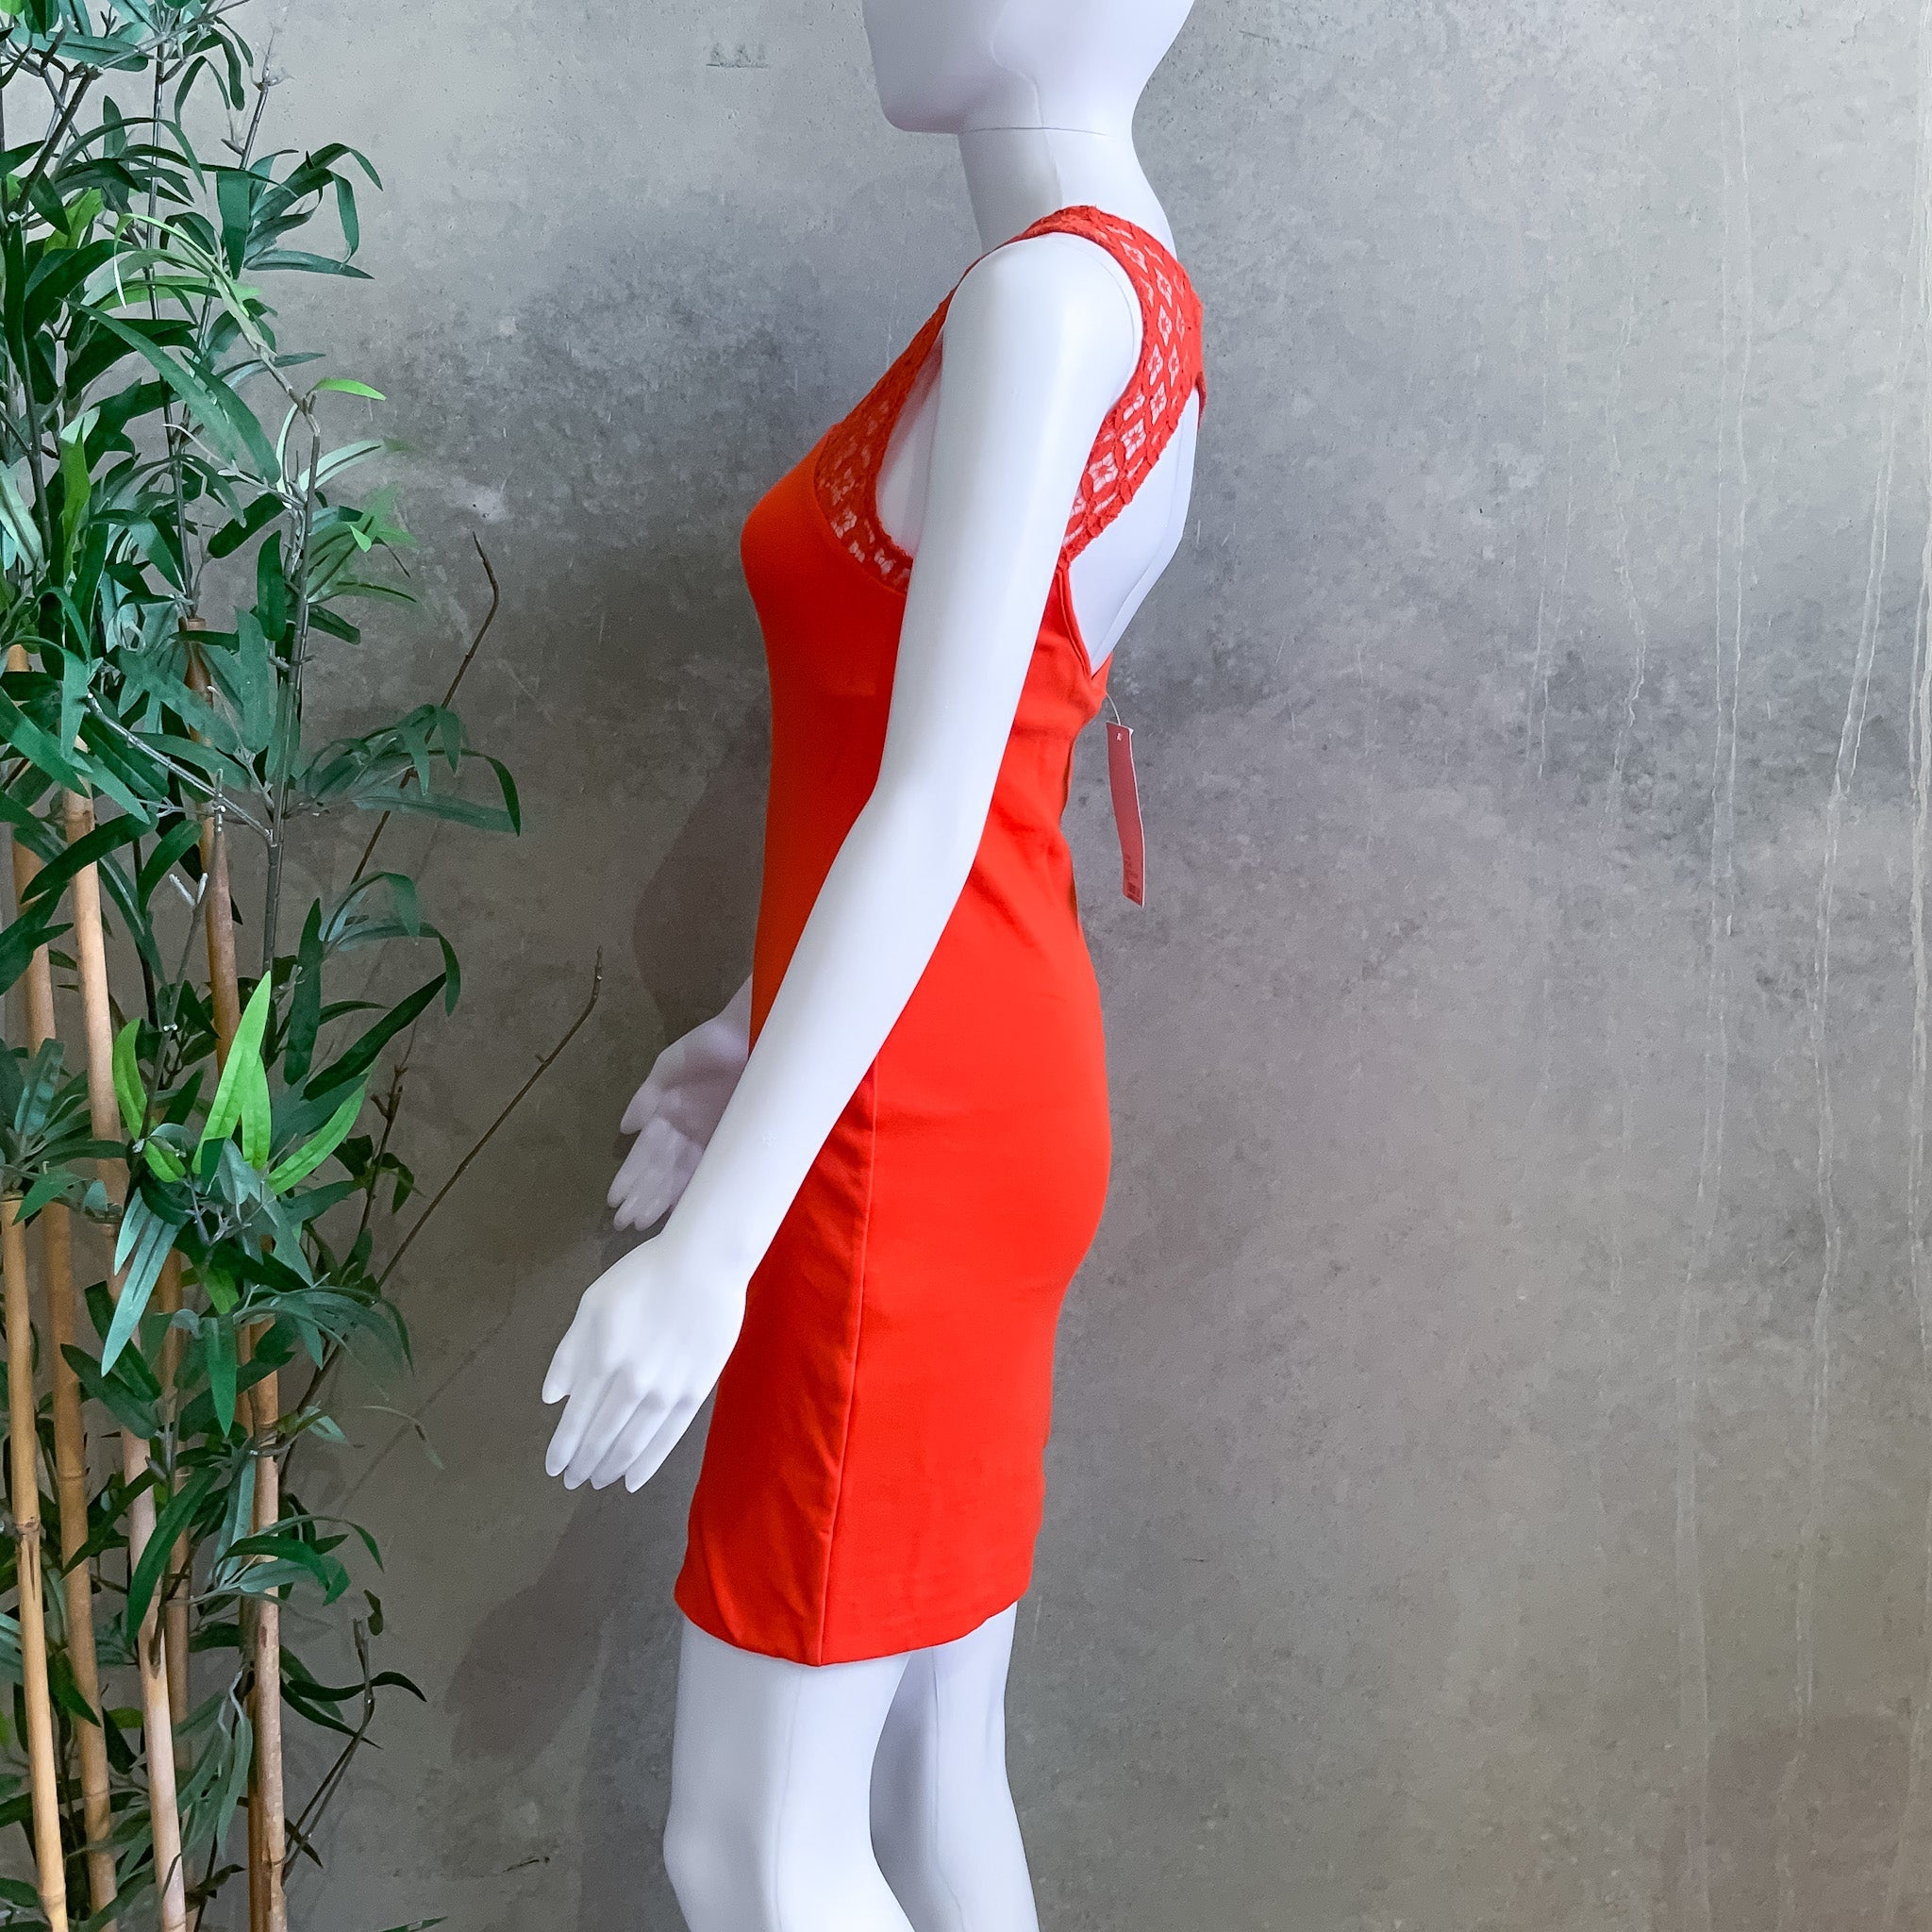 BNWT KOOKAI Womens Orange Sleeveless Bodycon Mini Open Back Dress - Fits 8/10